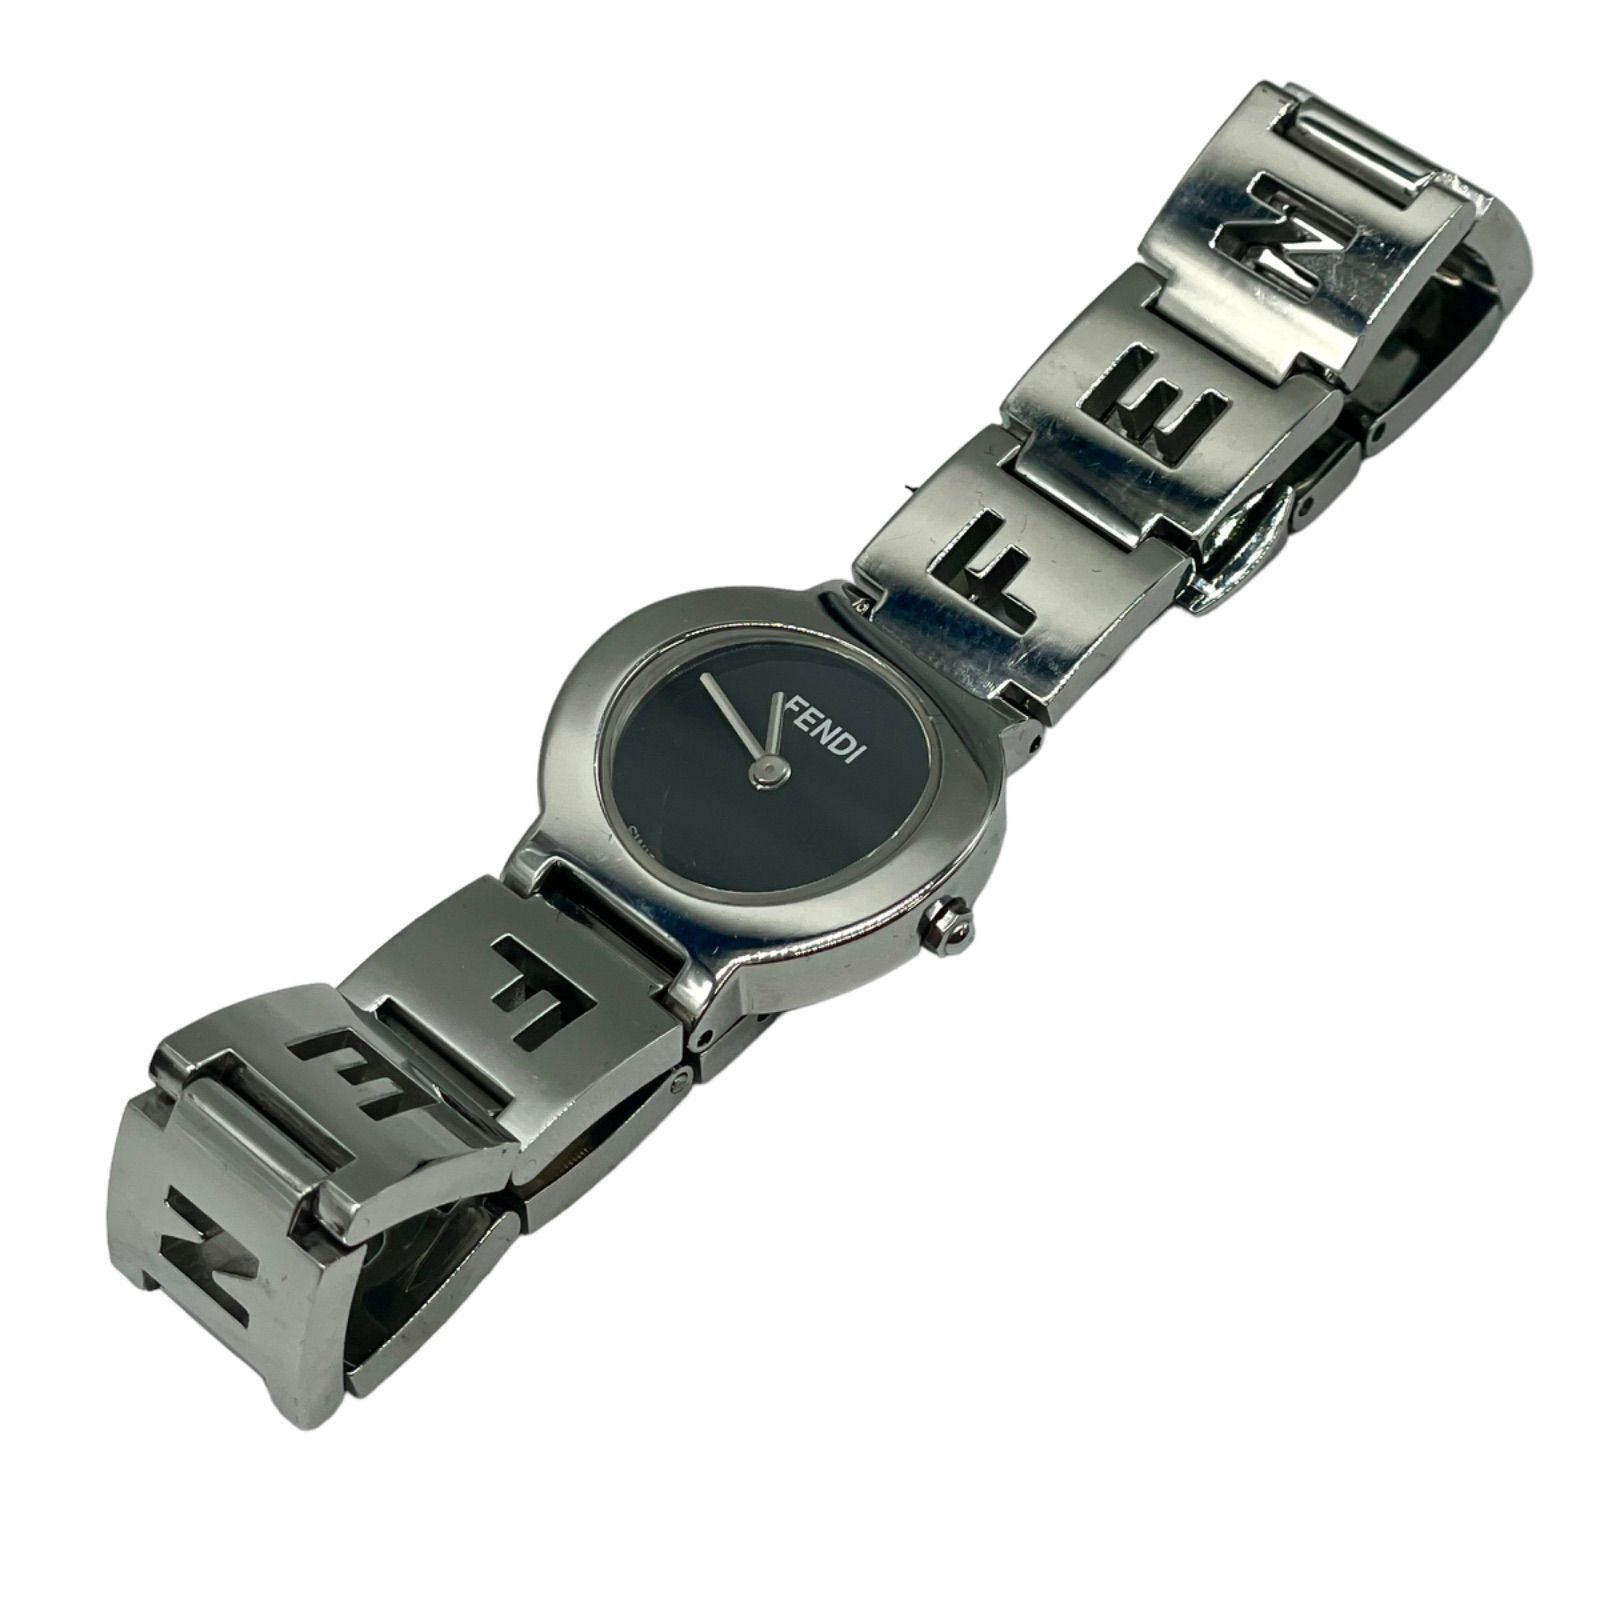 FENDI 3050L 黒文字盤　レディース腕時計　電池交換済み